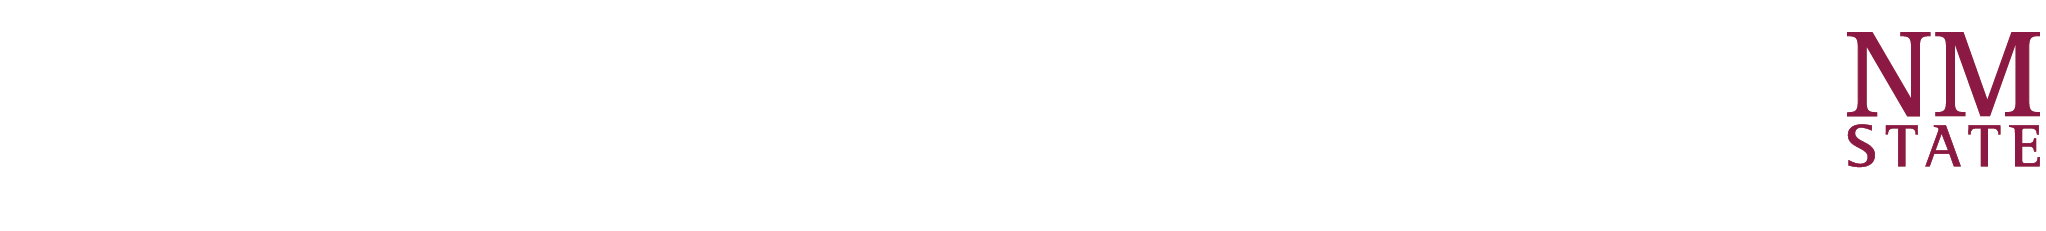 AHC-logo